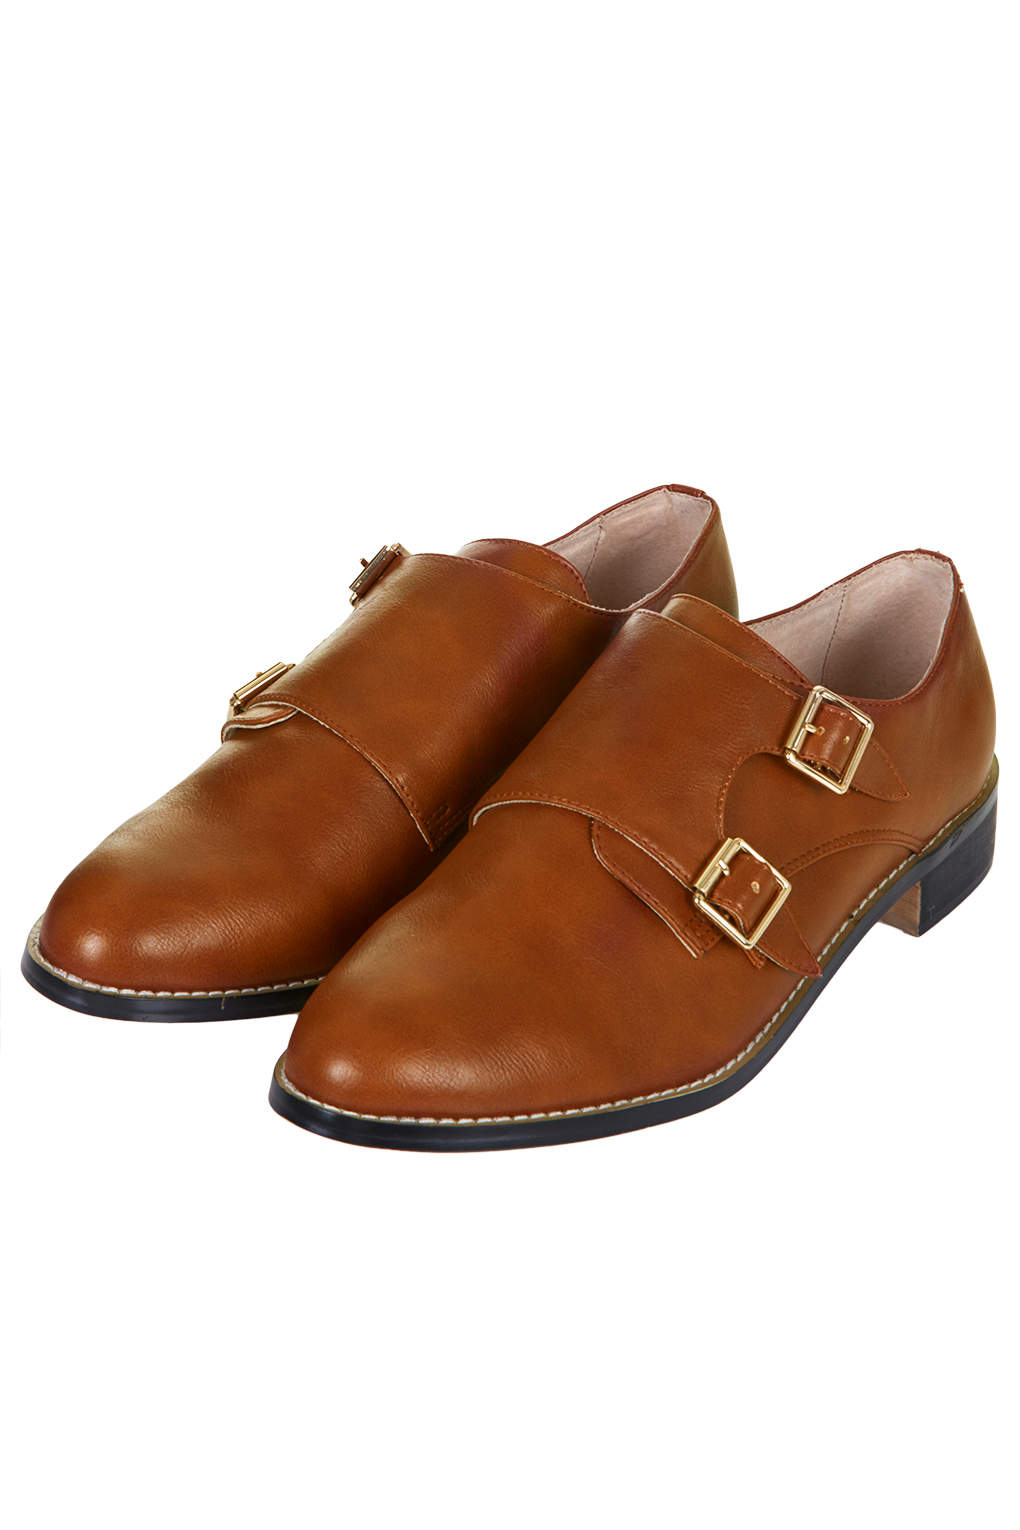 Topshop Fleetwood Buckle Monk Shoes Tan in Brown (TAN) | Lyst